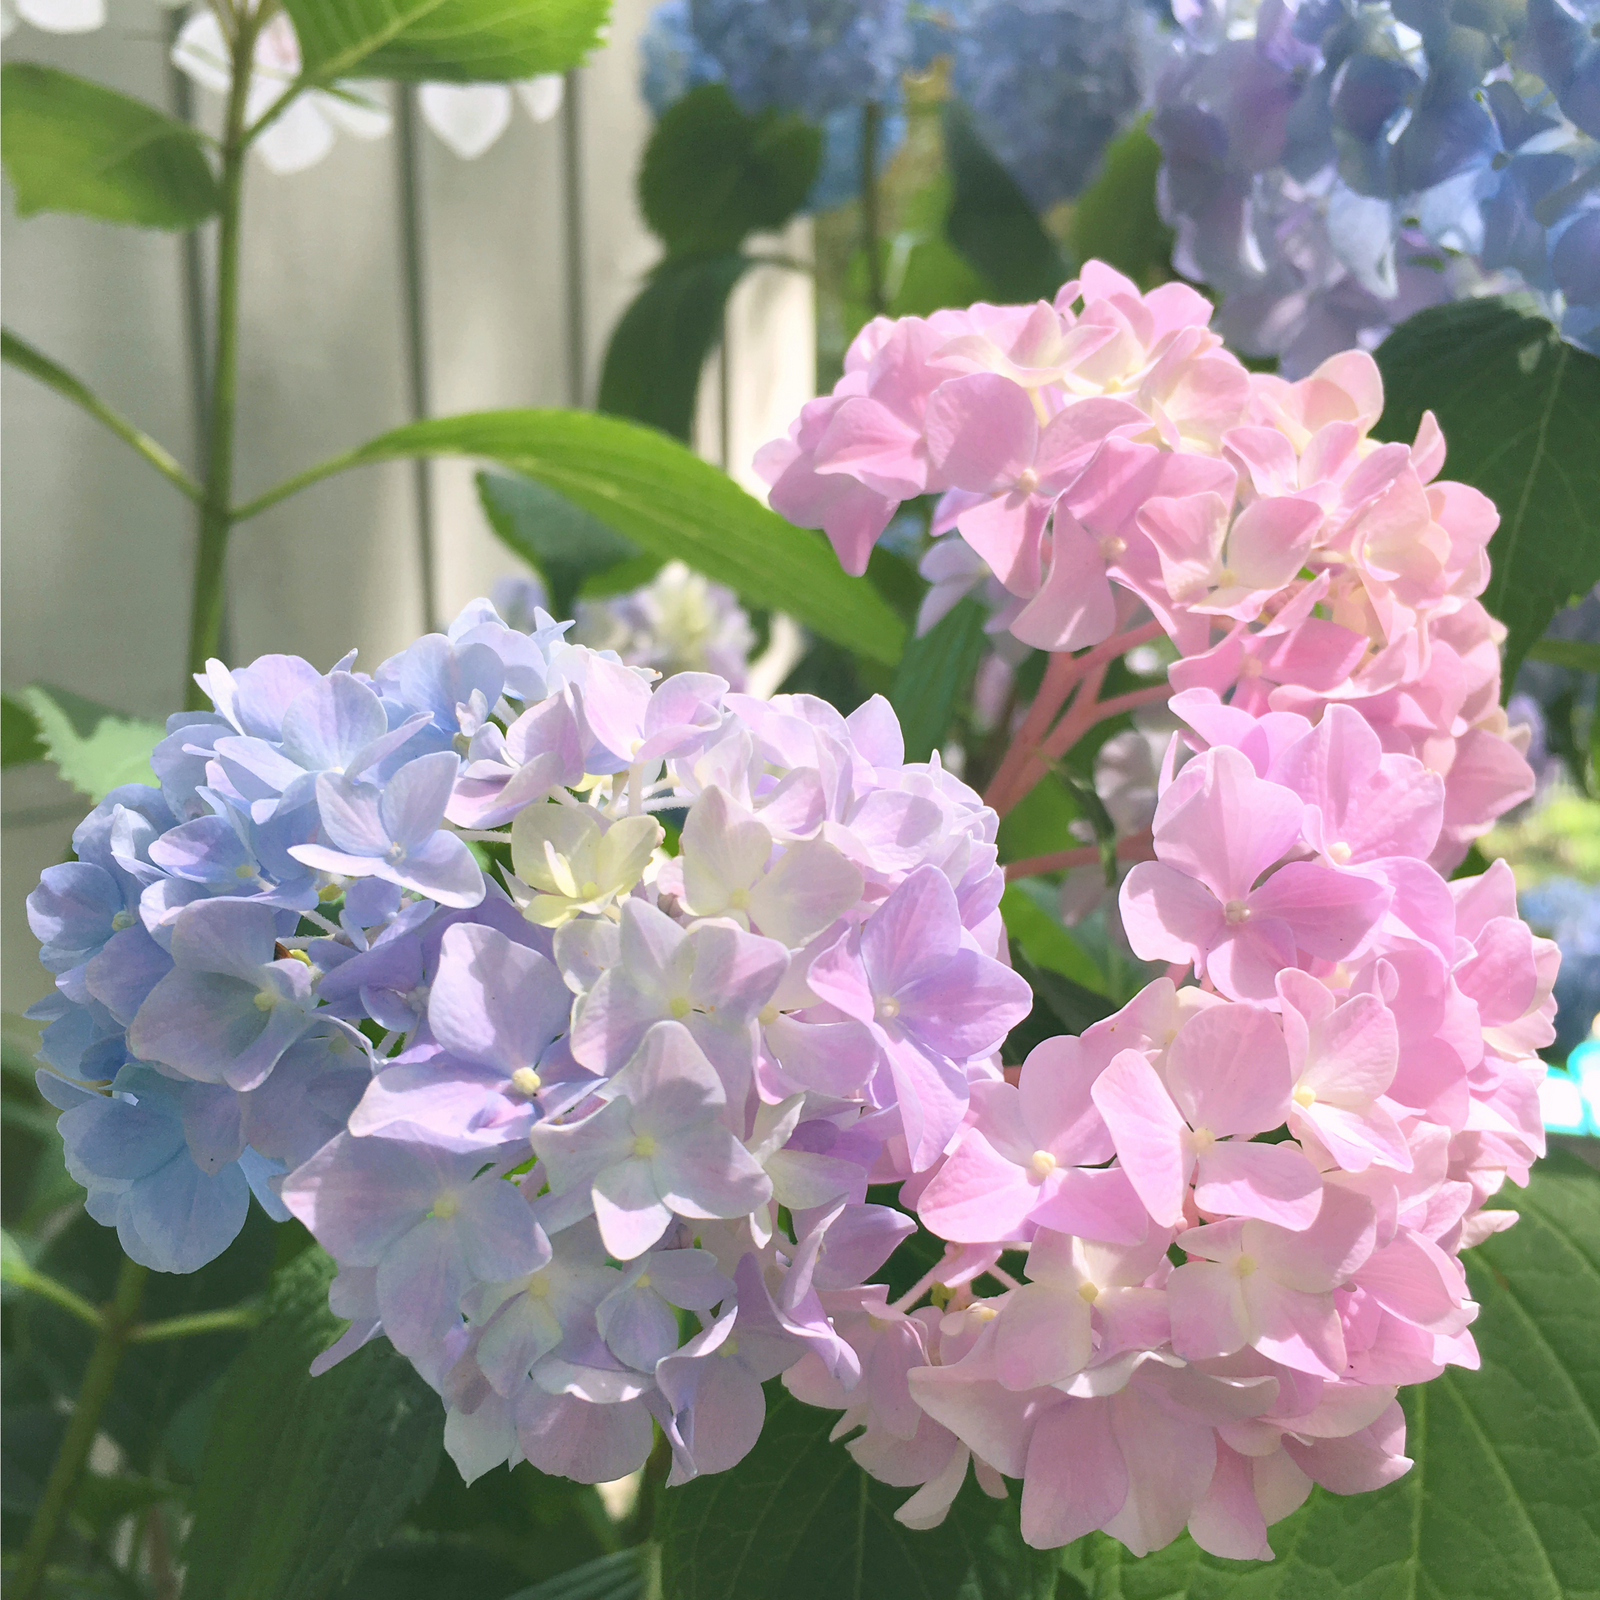 JS Weddings and Events, Grand Rapids Wedding Planner and Floral Designer - My Cutting Garden, My Flower Garden